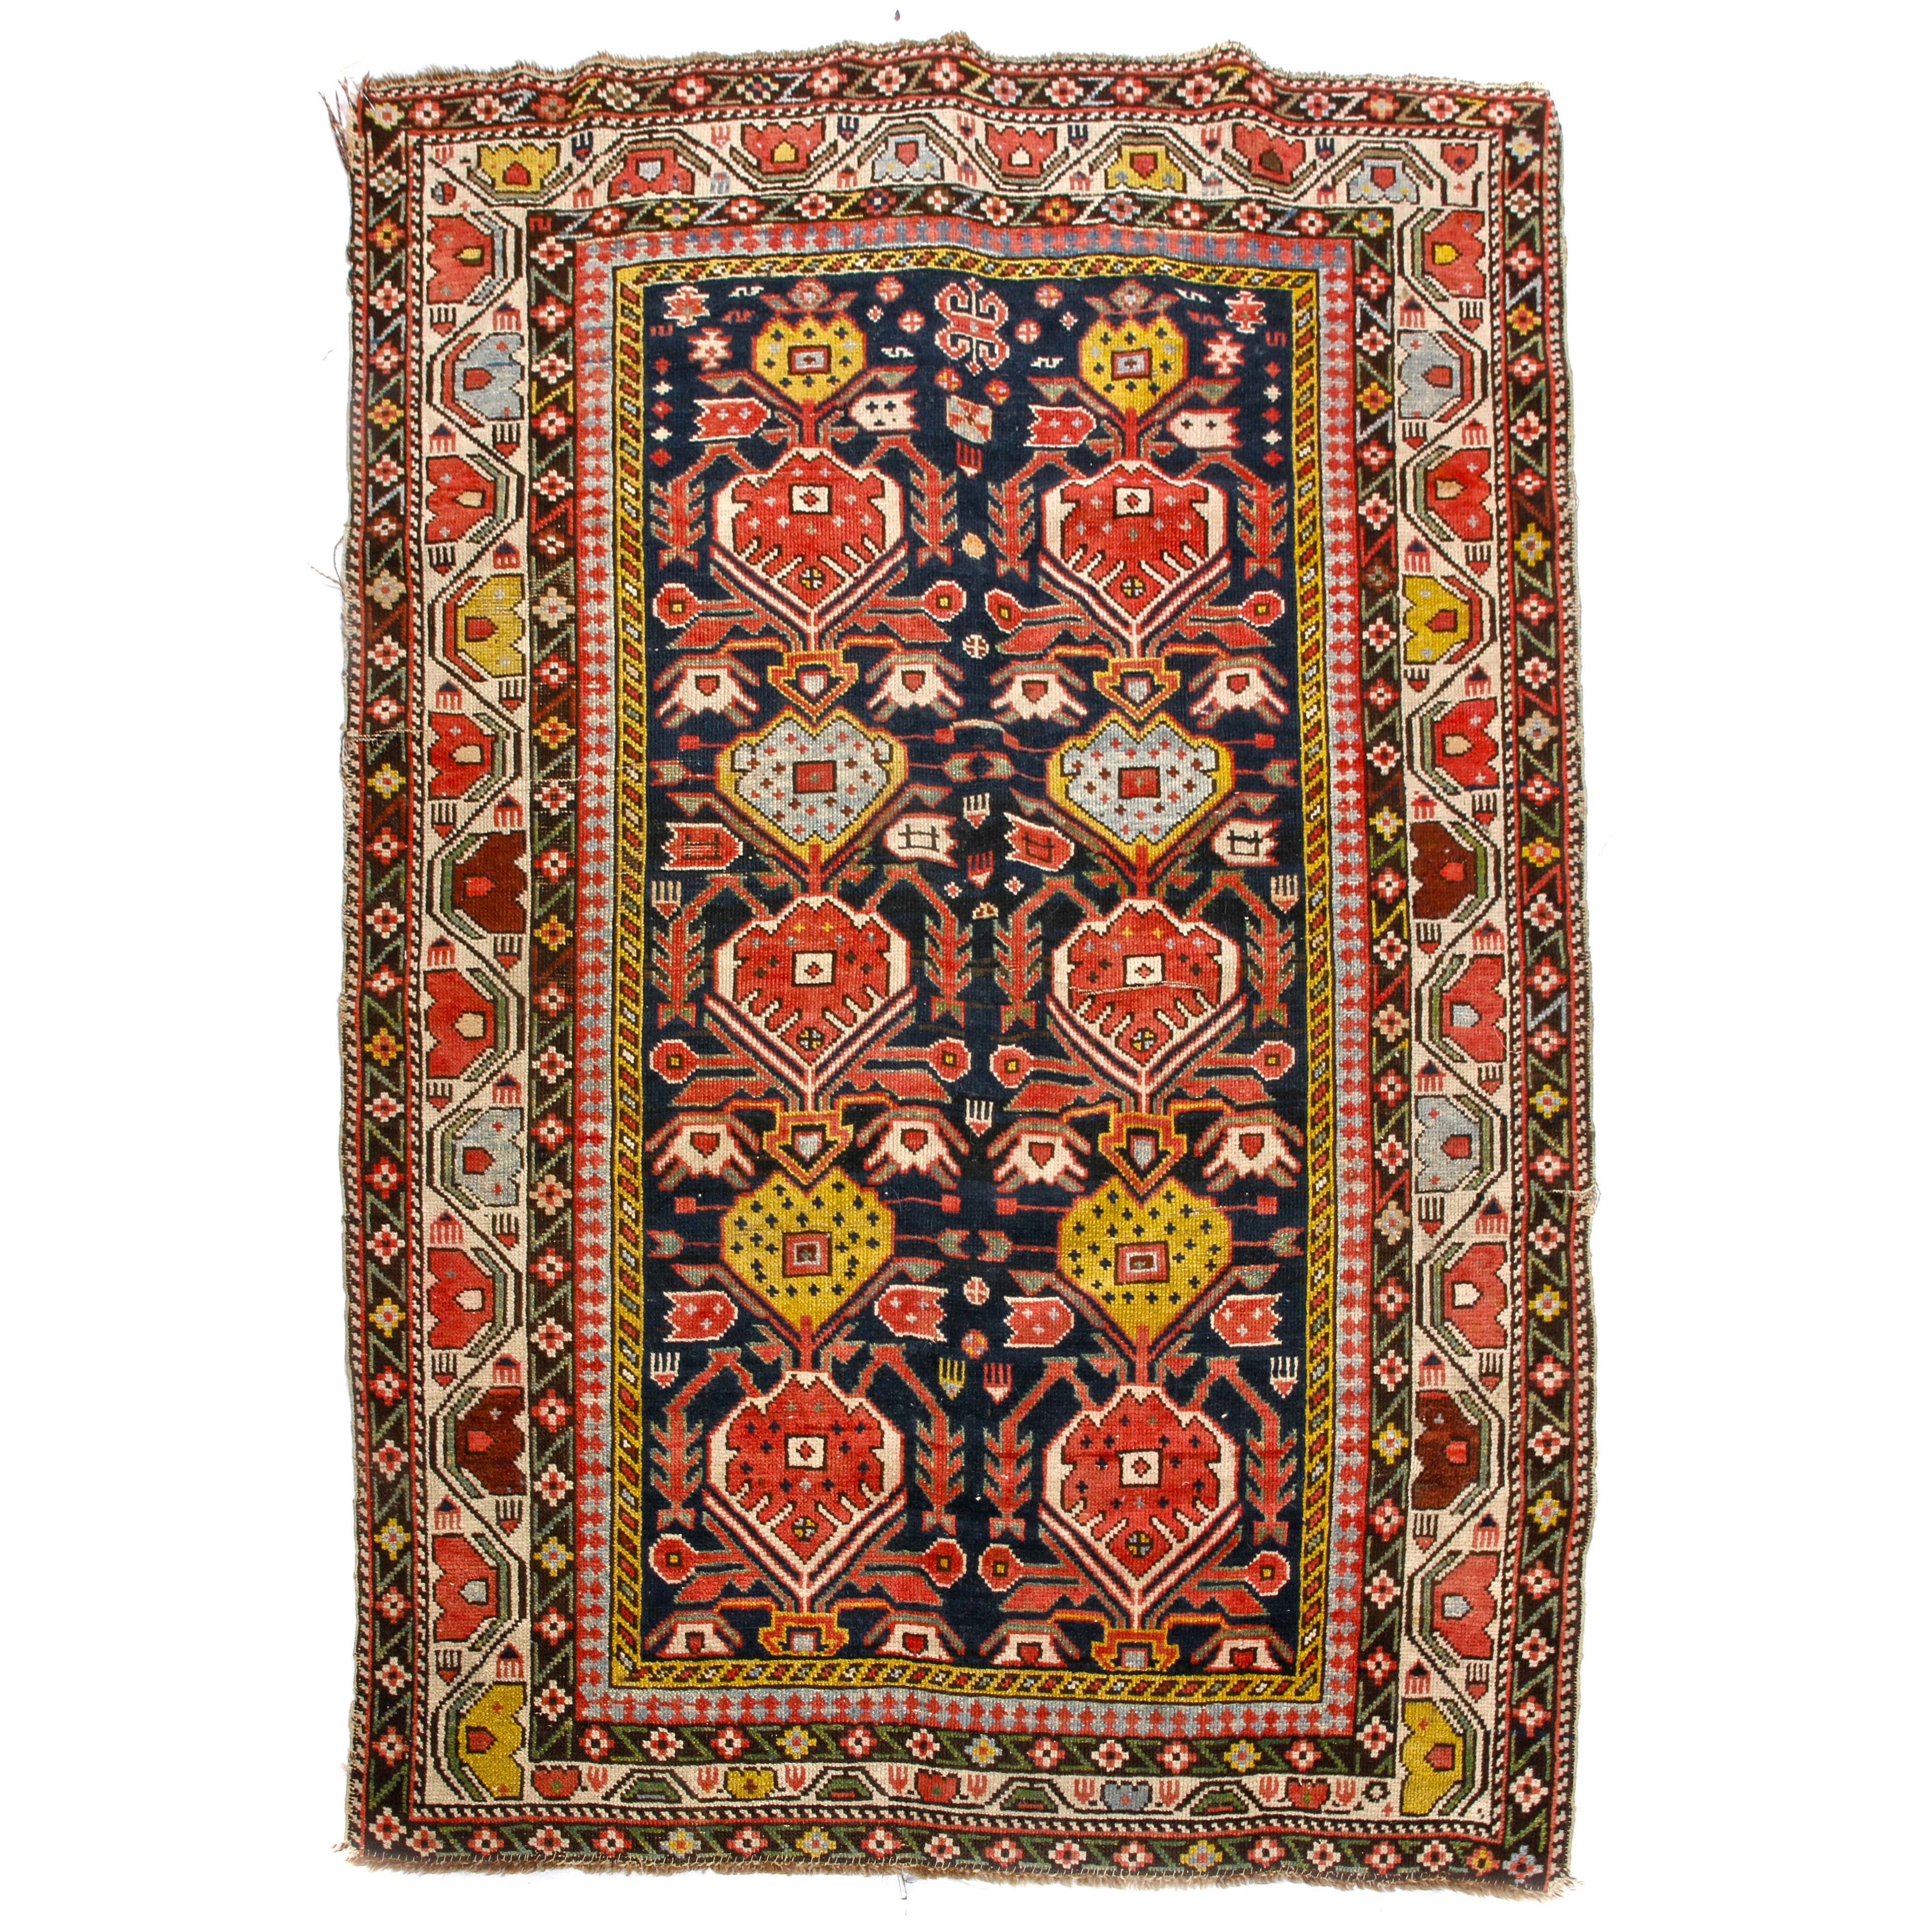 KURDISH CARPET Kurdish carpet  3a4d77